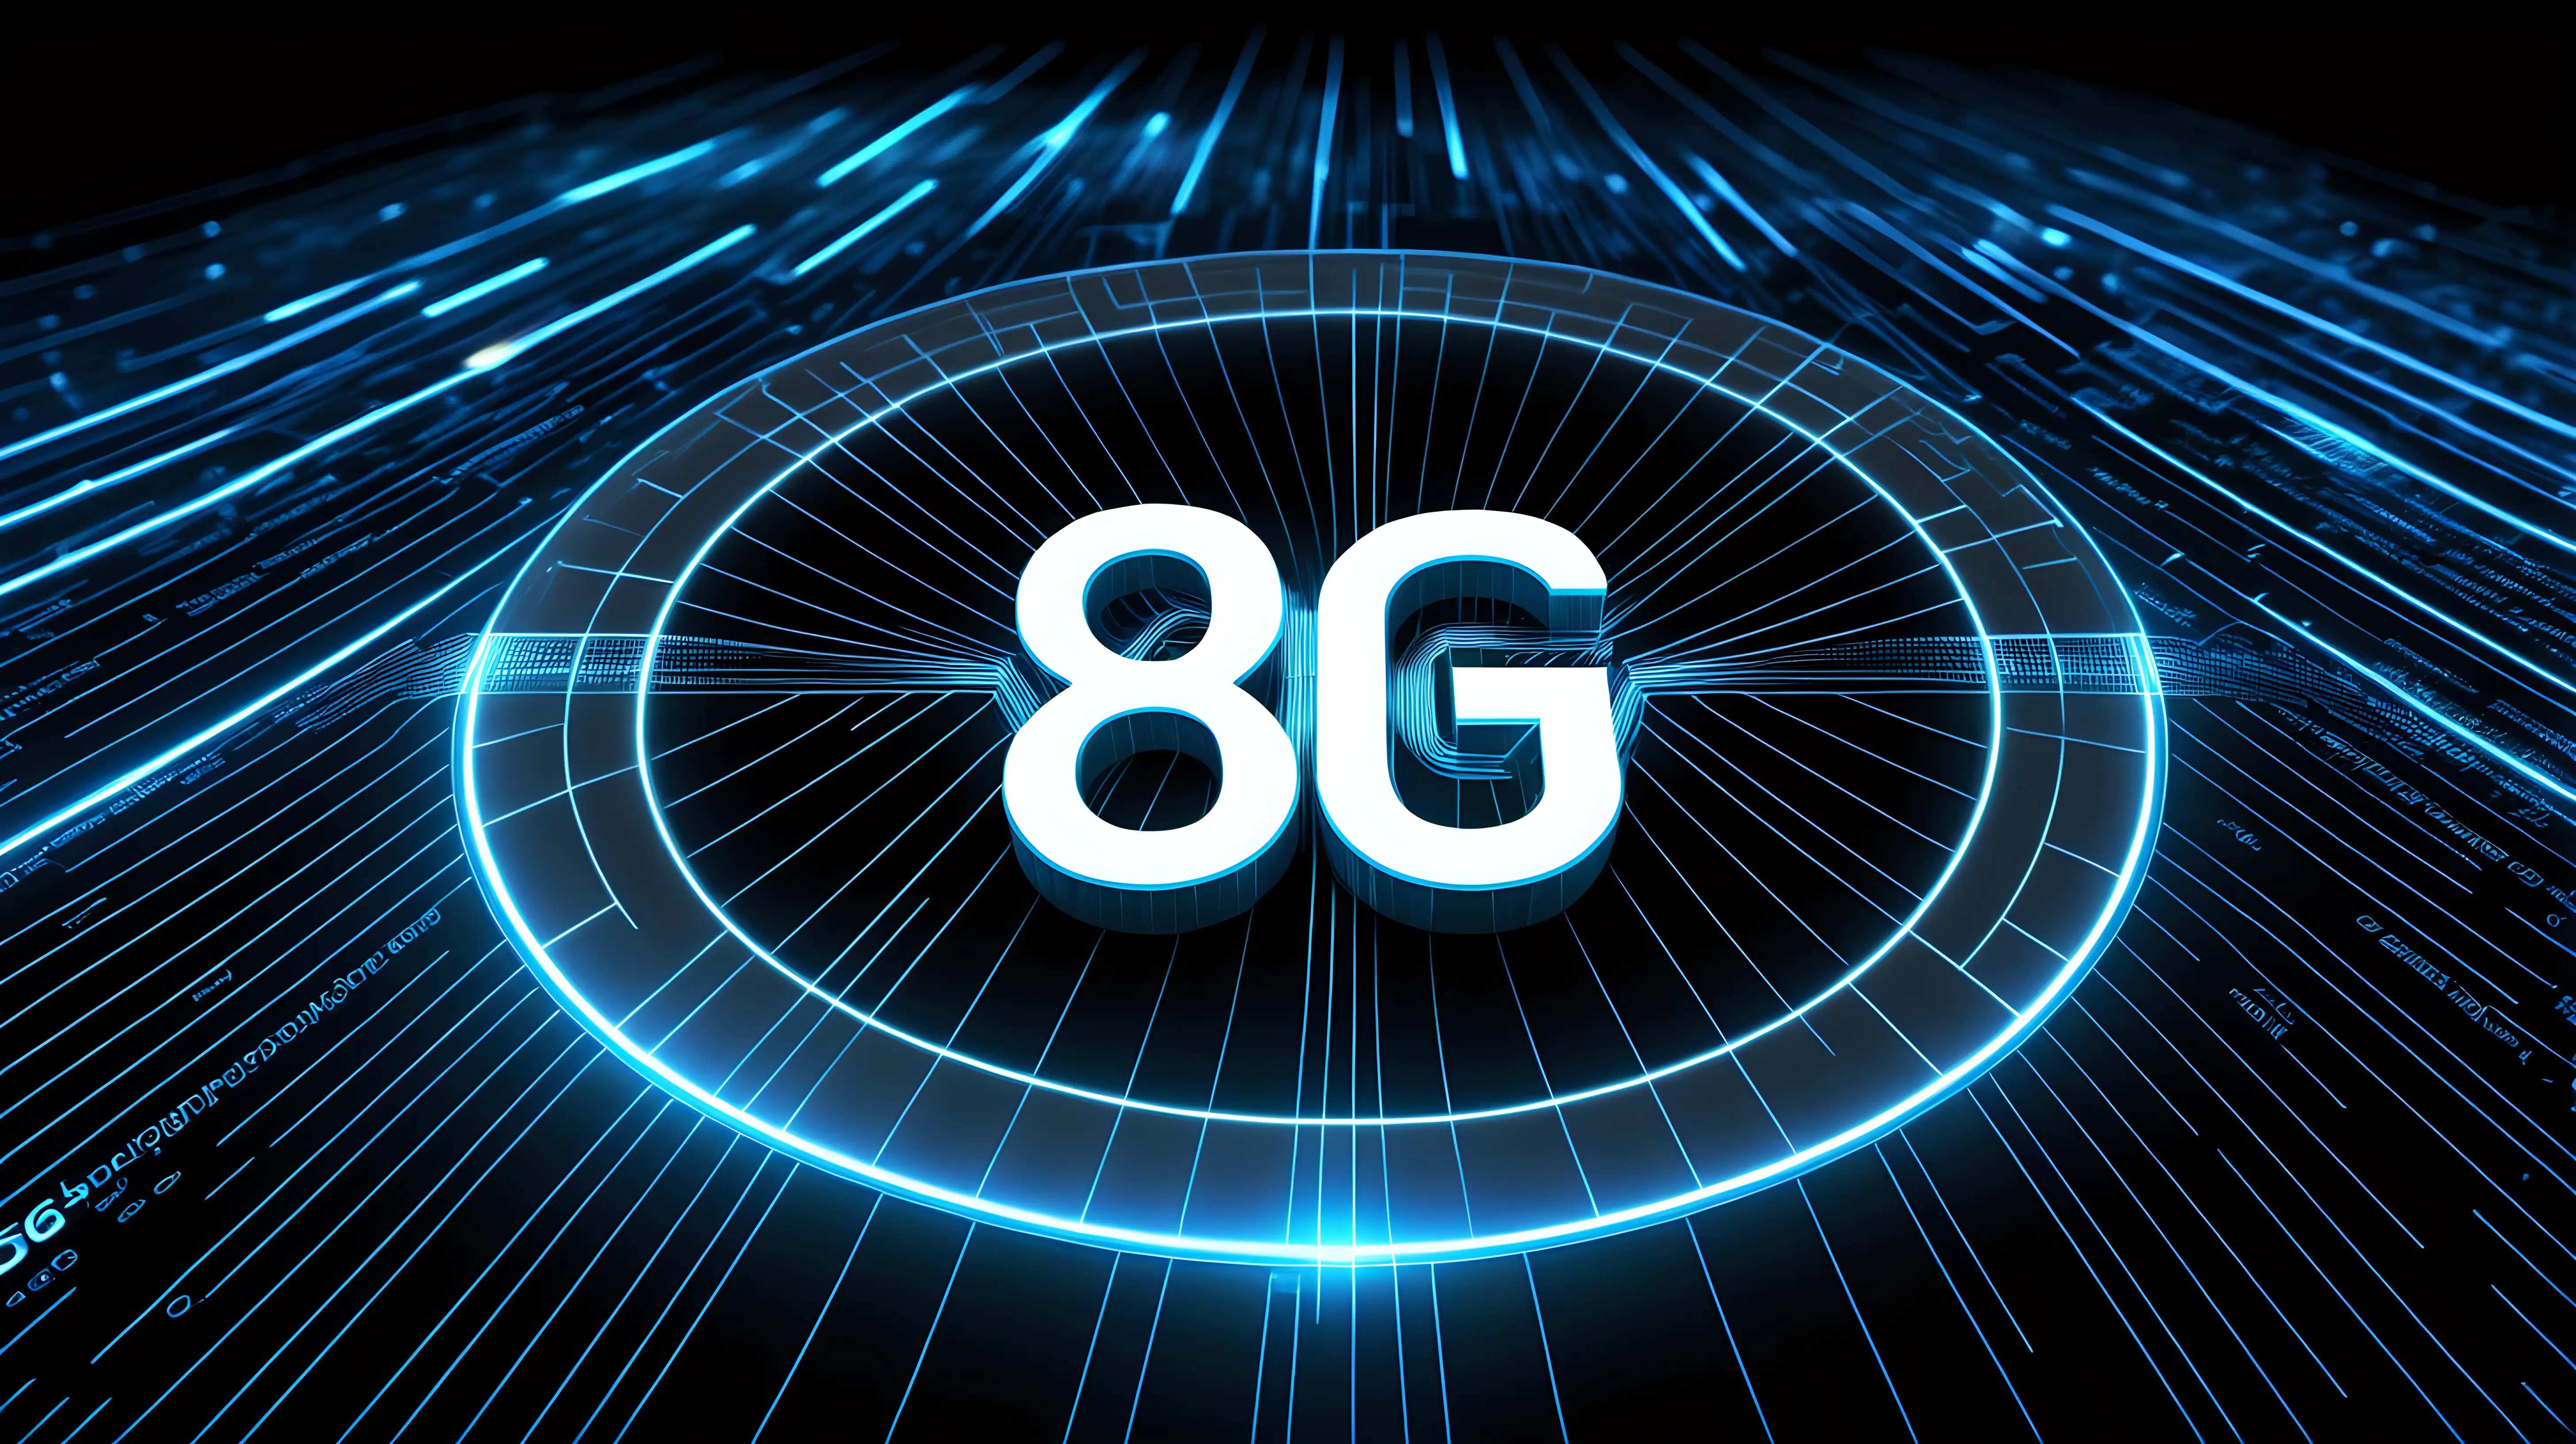 Futuristic 8G Technology Bold Illuminated Symbol of Advanced Connectivity